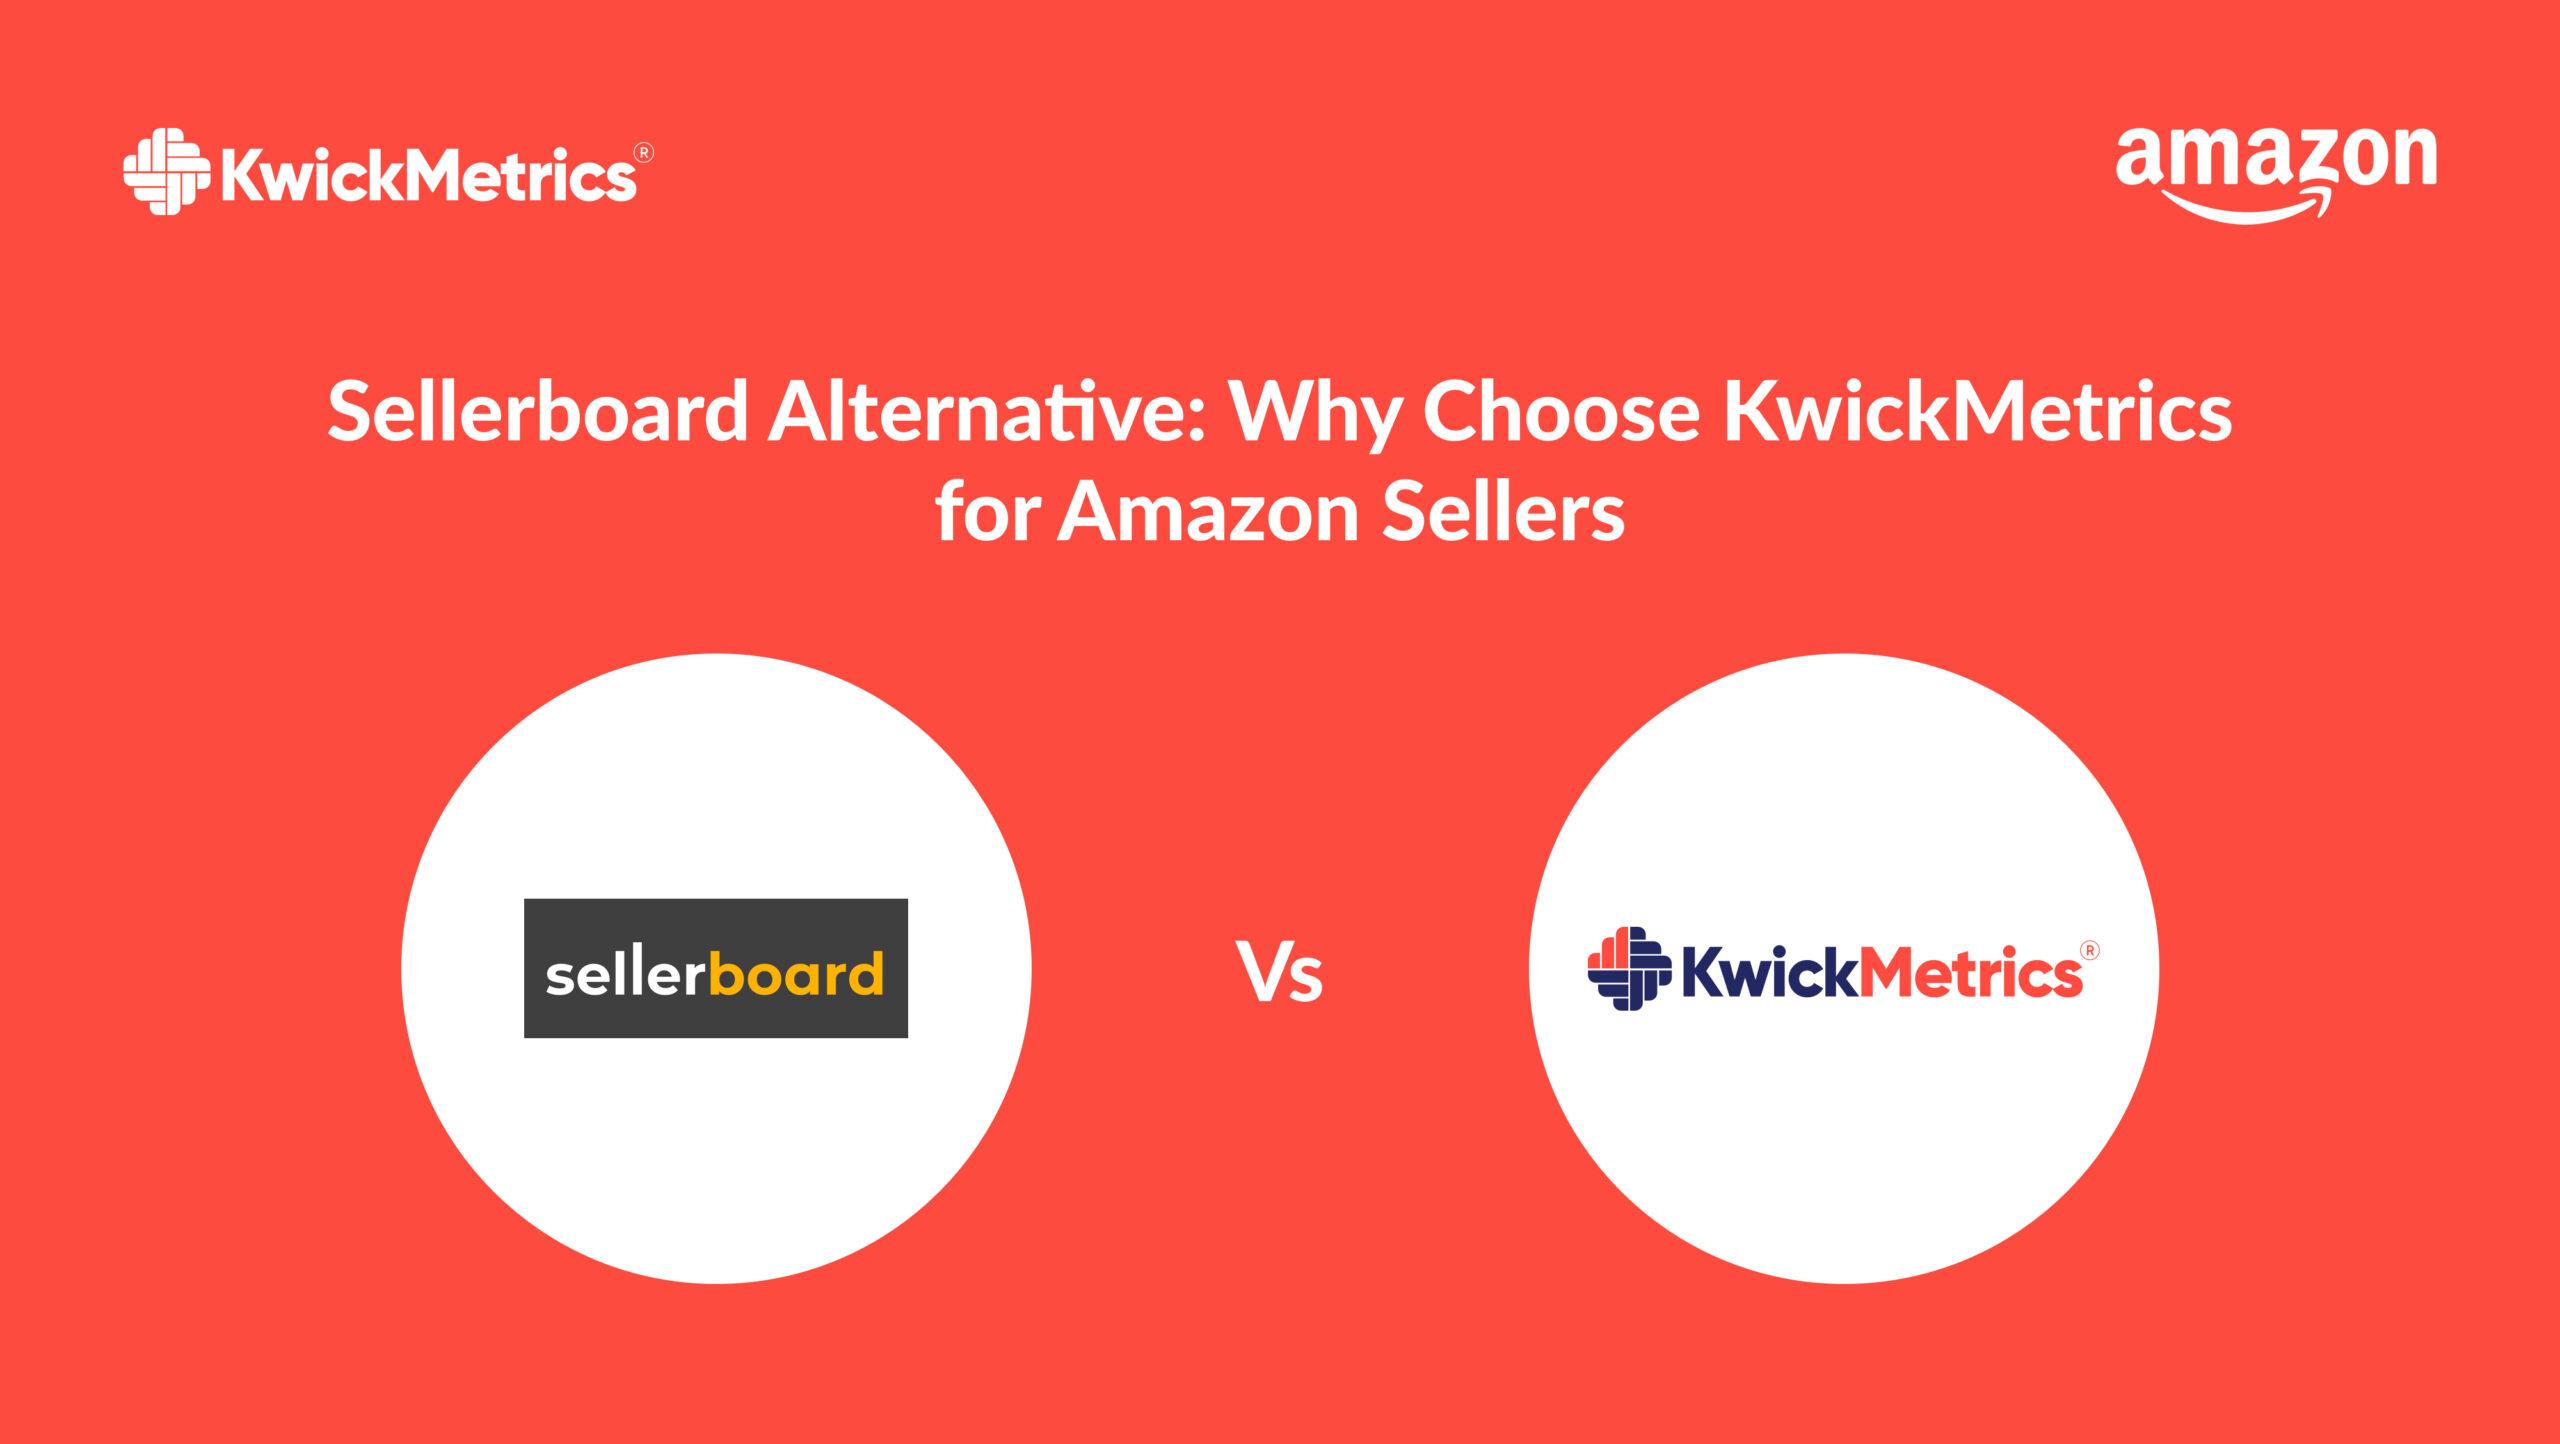 Sellerboard Alternative: Why Choose KwickMetrics for Amazon Sellers